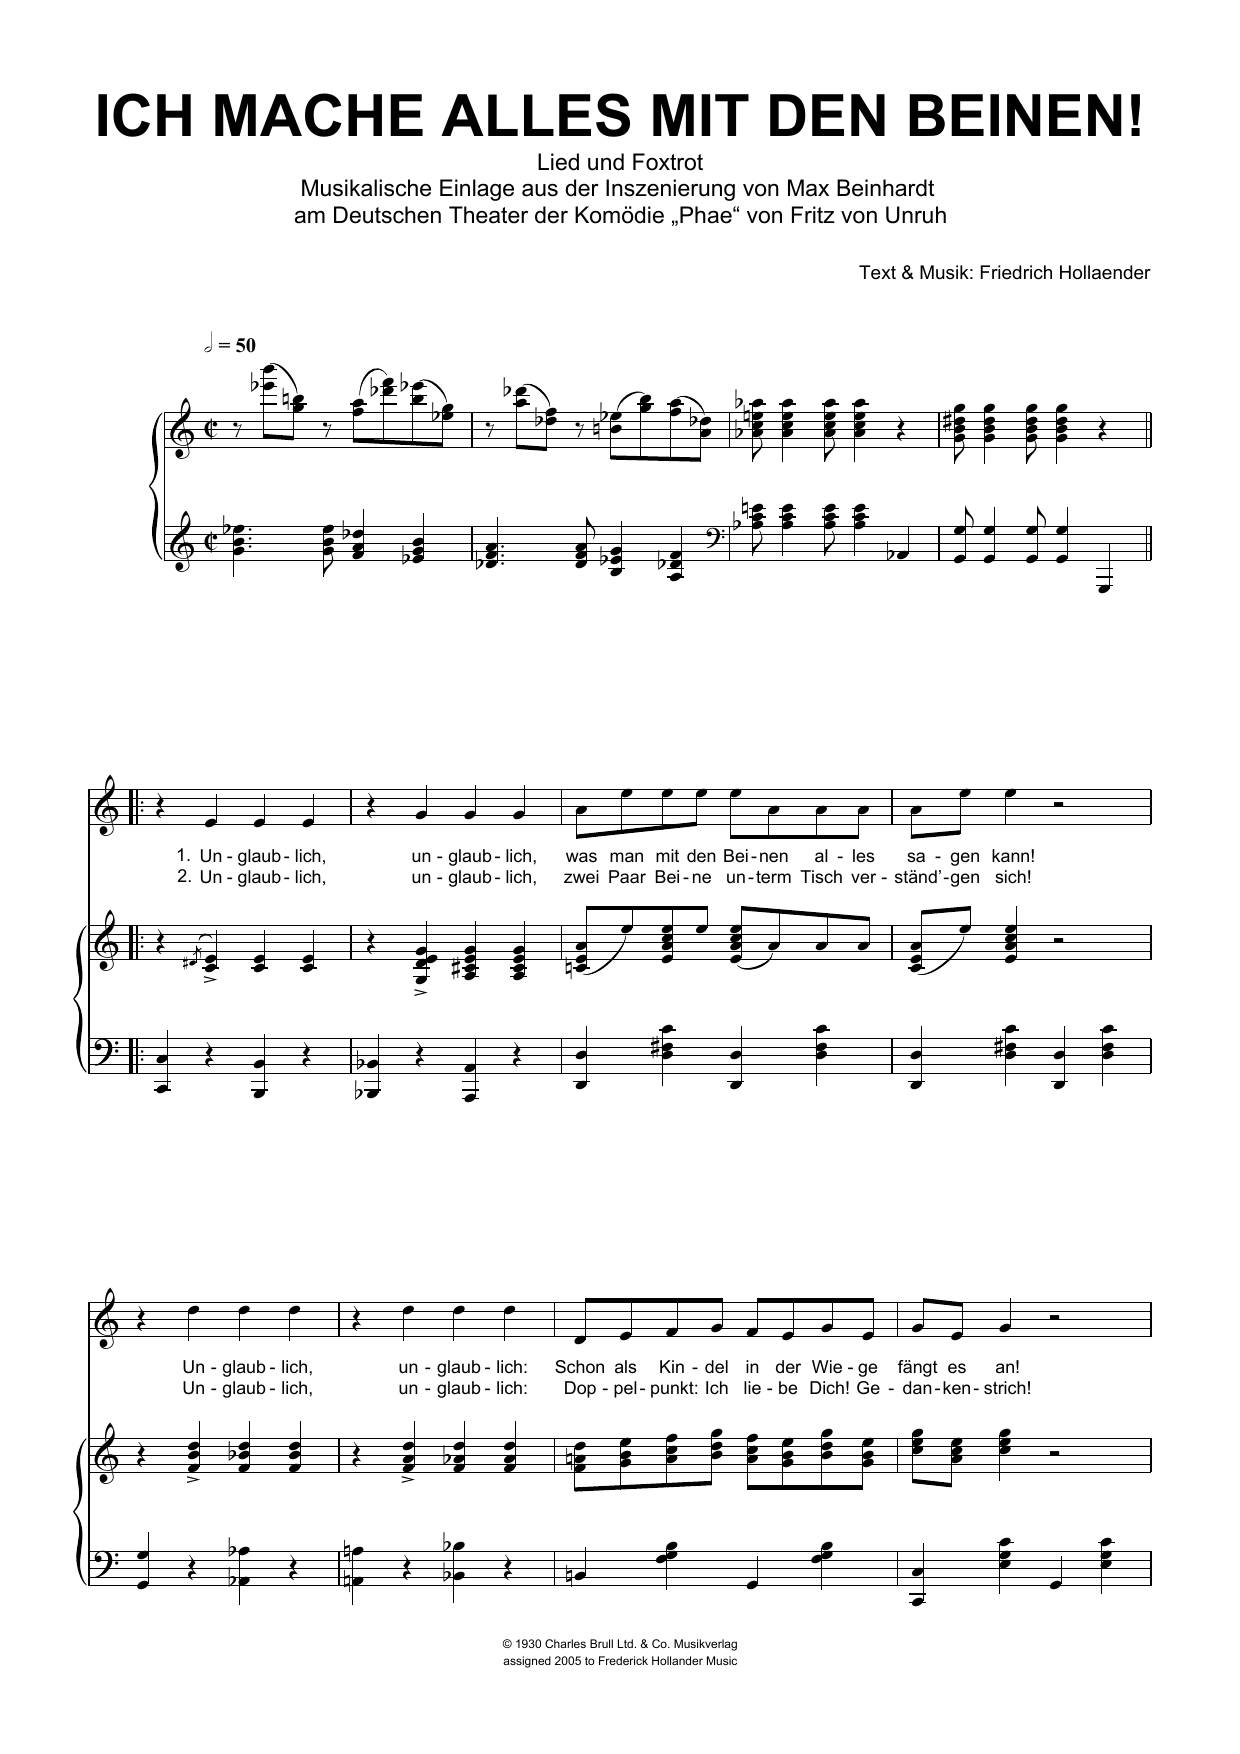 Download Friedrich Hollaender Ich Mache Alles Mit Den Beinen! Sheet Music and learn how to play Piano & Vocal PDF digital score in minutes